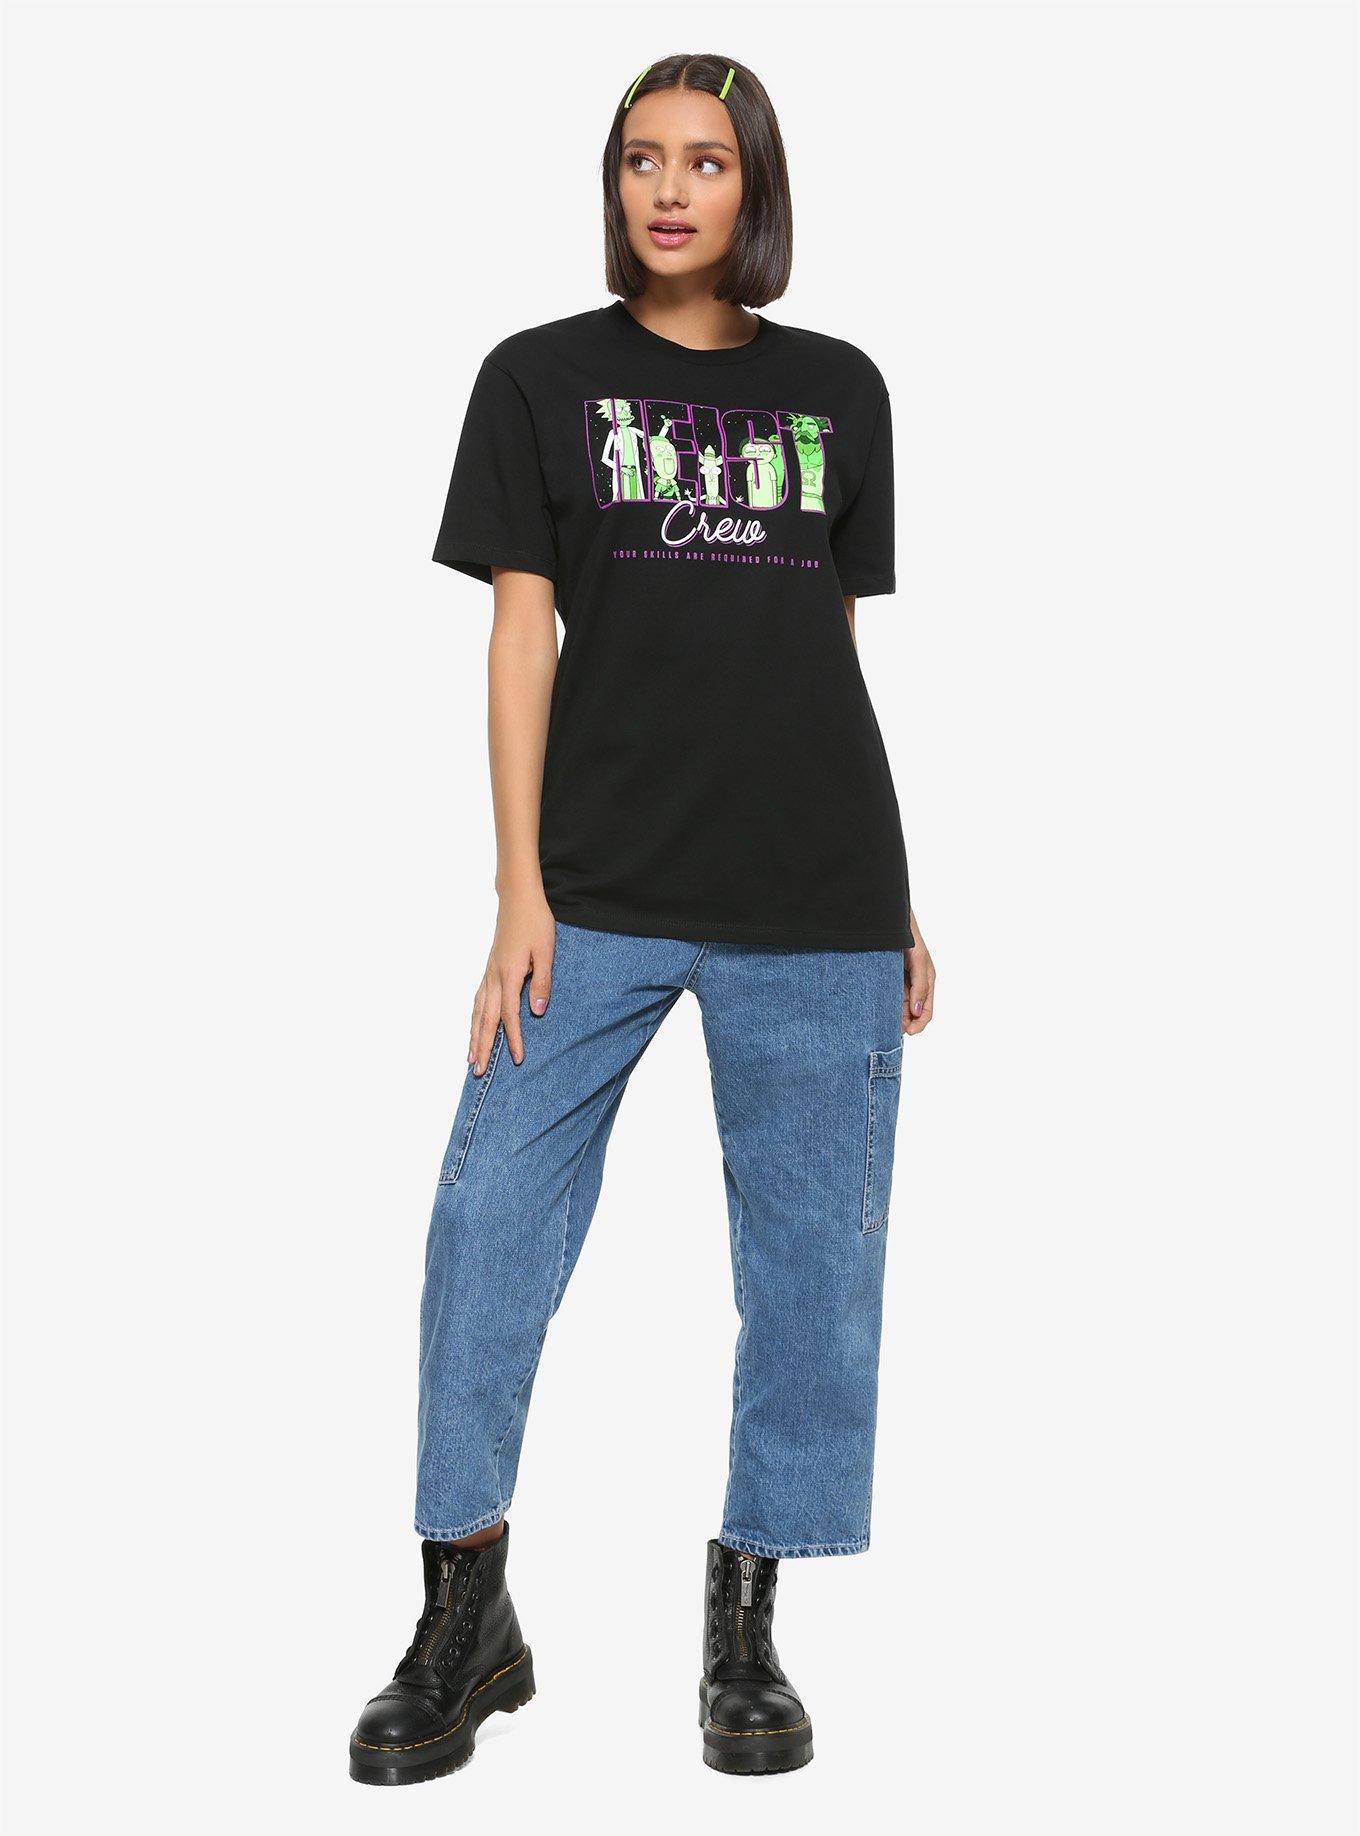 Rick And Morty Heist Crew Girls T-Shirt, MULTI, alternate